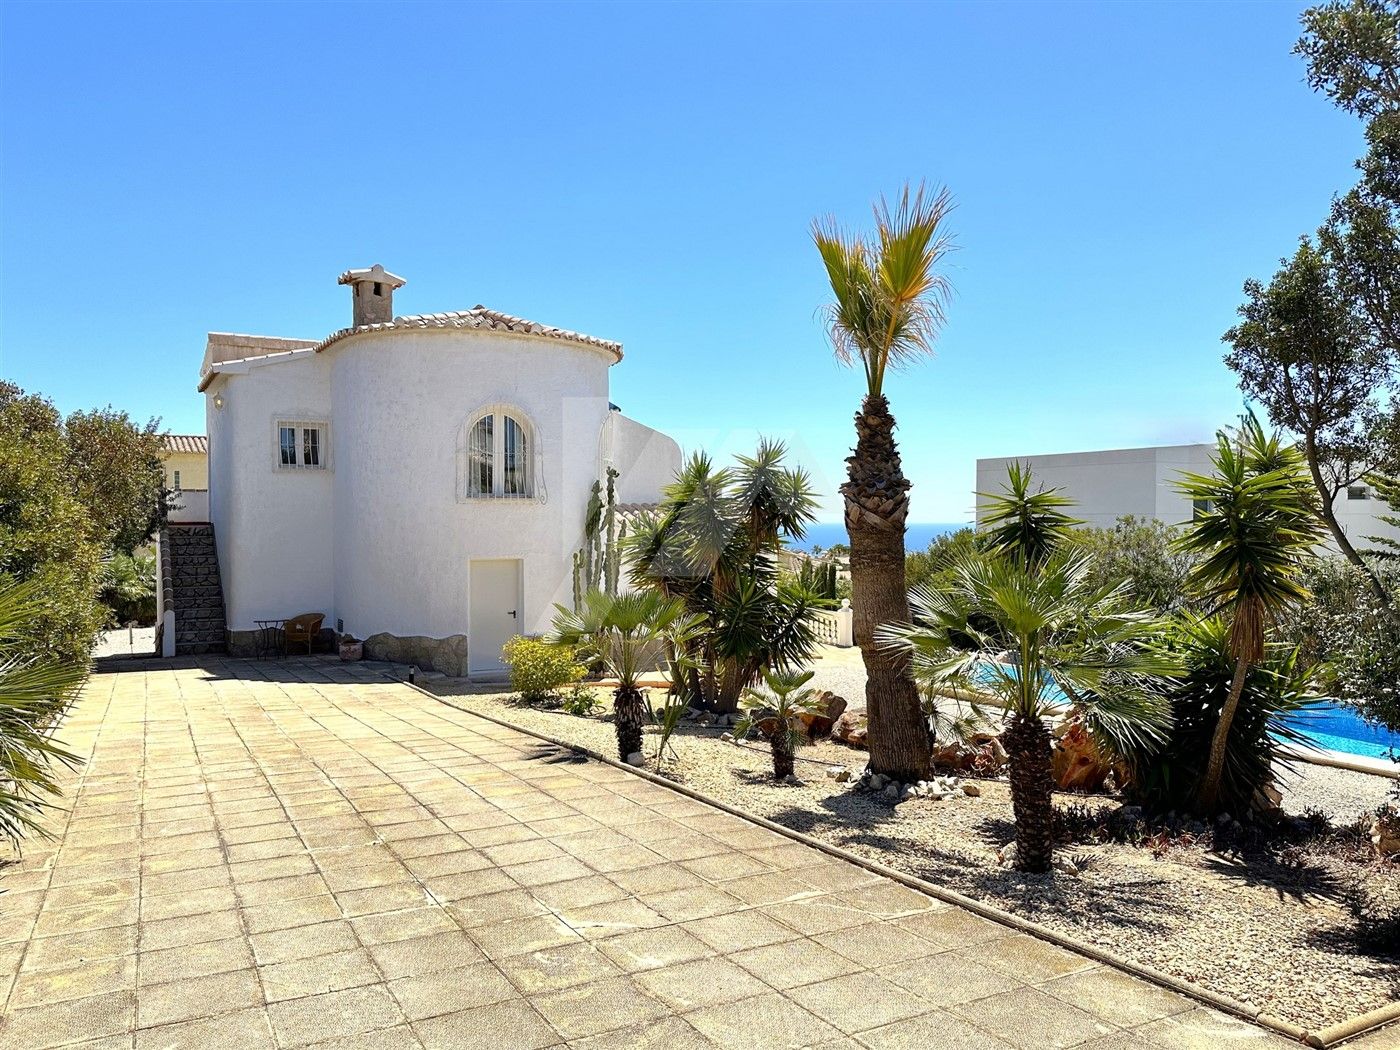 Villa met zeezicht in Cumbre del Sol, Benitachell, Costa Blanca.